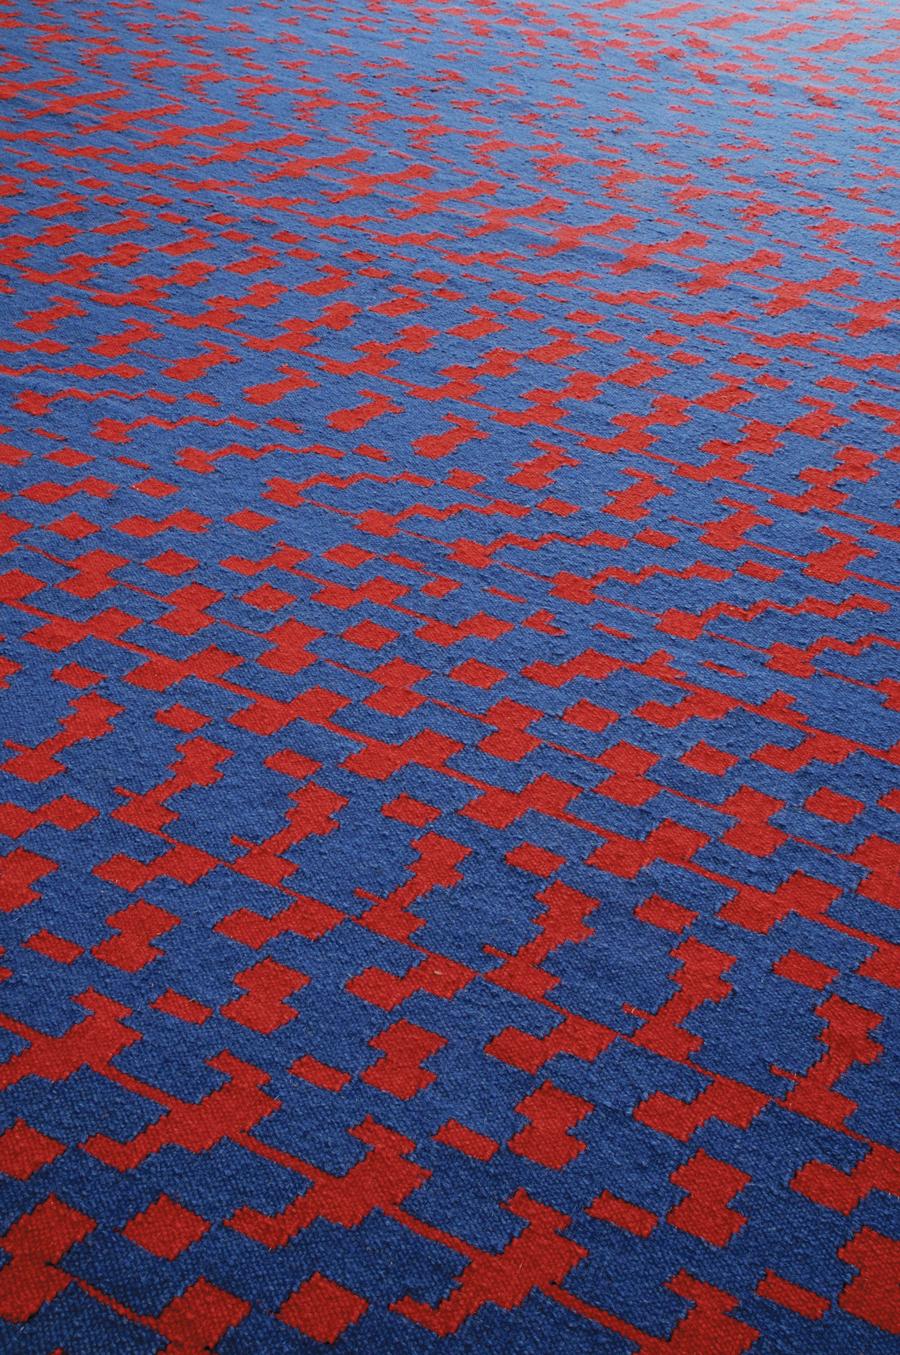 Fuoritempo - Red Blue - Design Kilim Rug Paolo Giordano Wool Carpet Cotton In New Condition For Sale In MILANO, ML